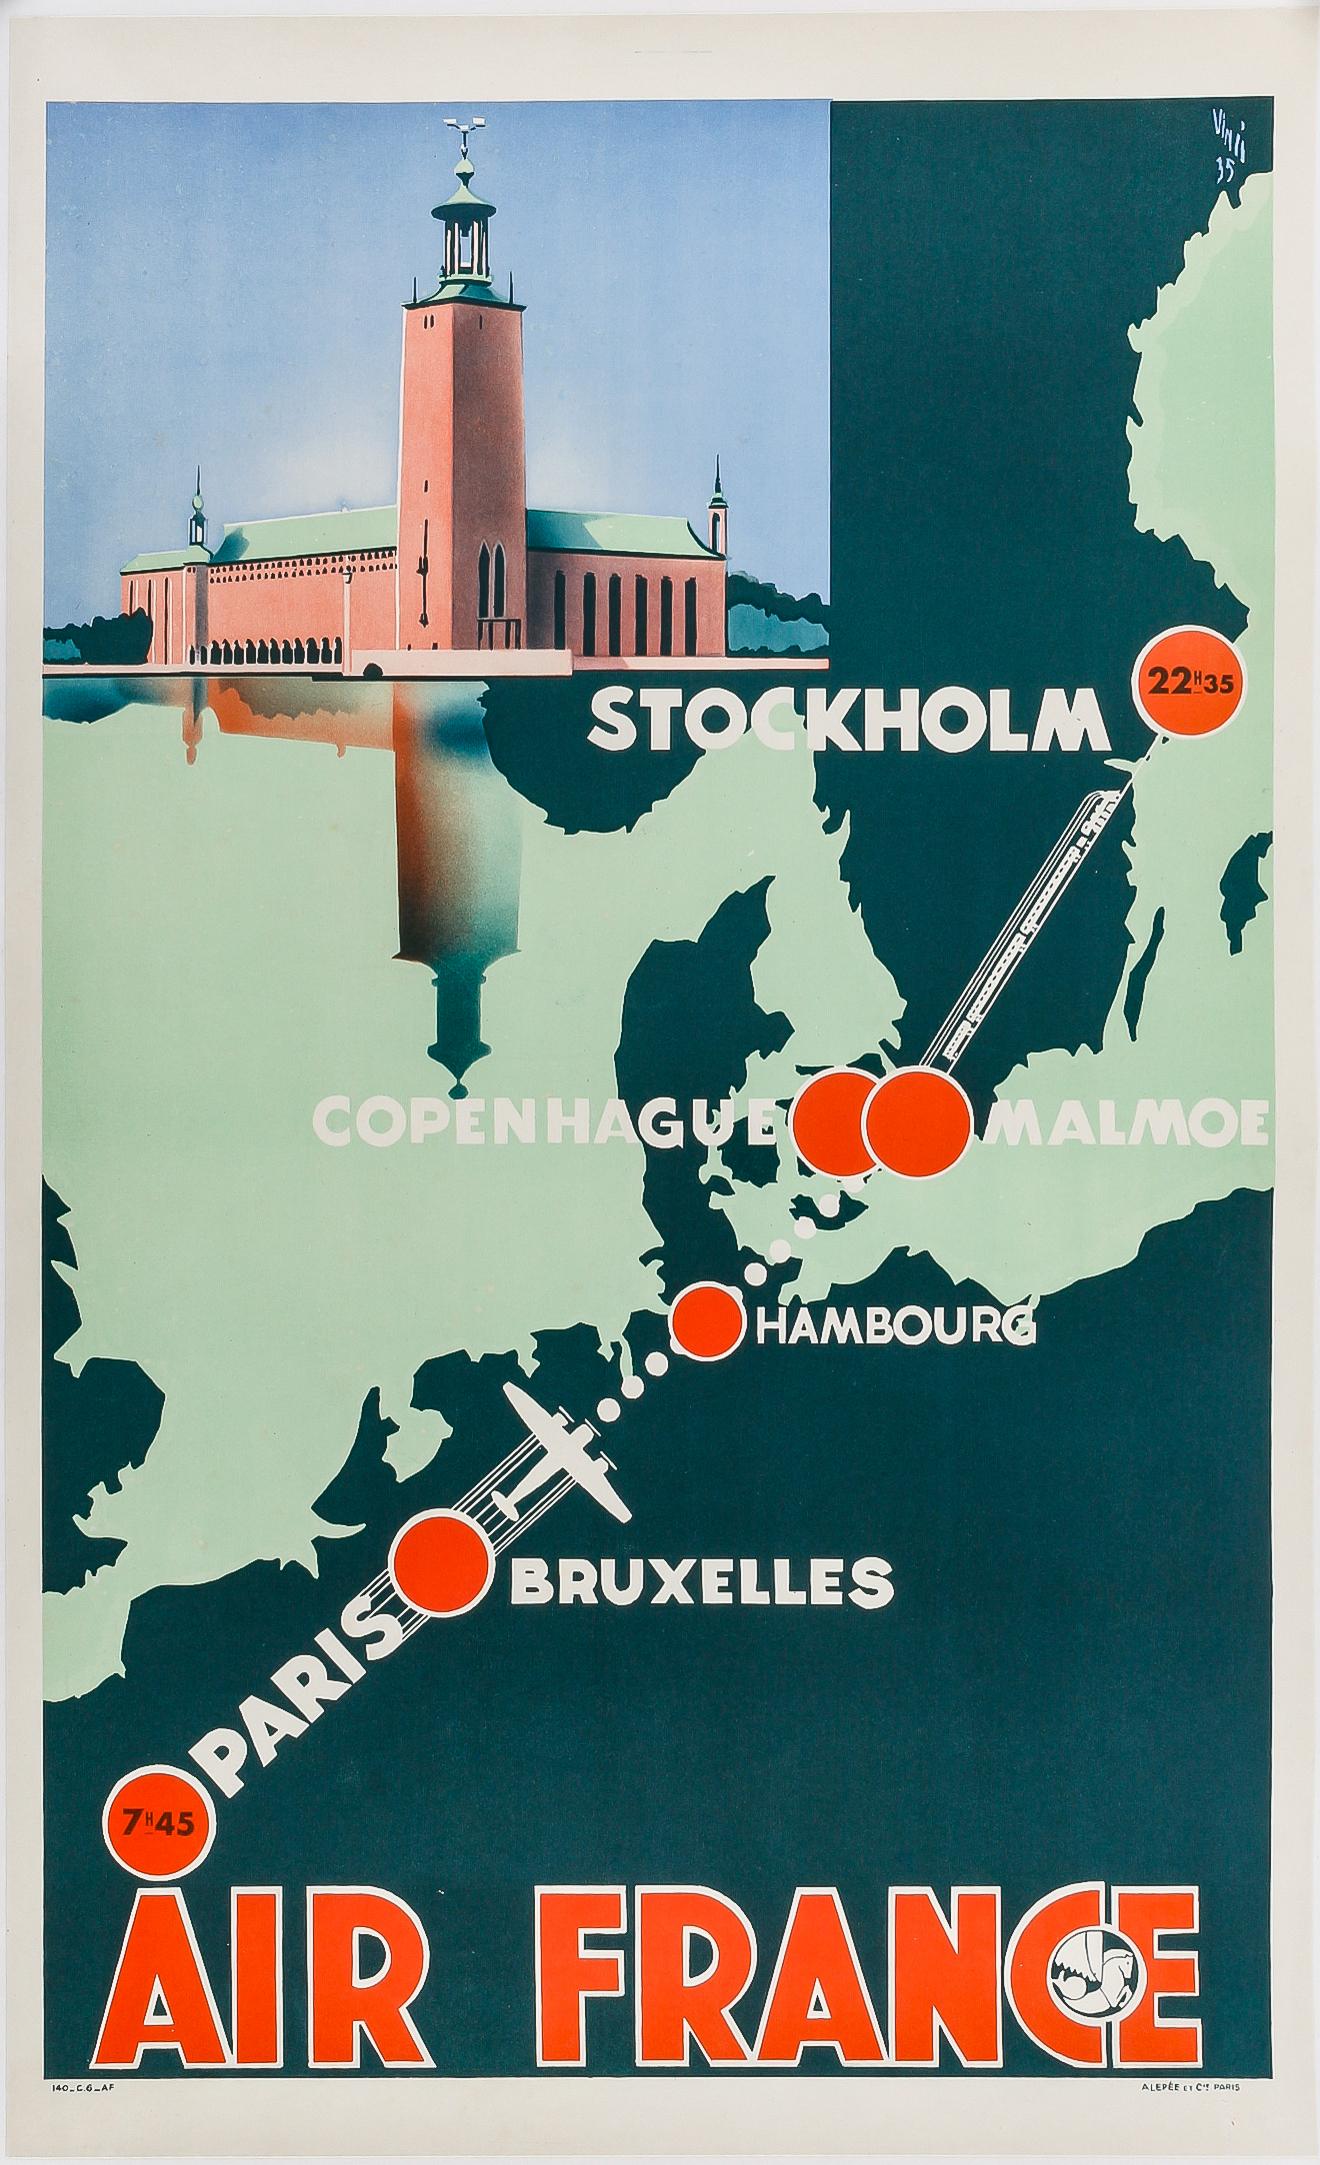 French Vinci, Original Air France Poster, Paris Stockholm, Brussels, Copenhagen, 1935 For Sale